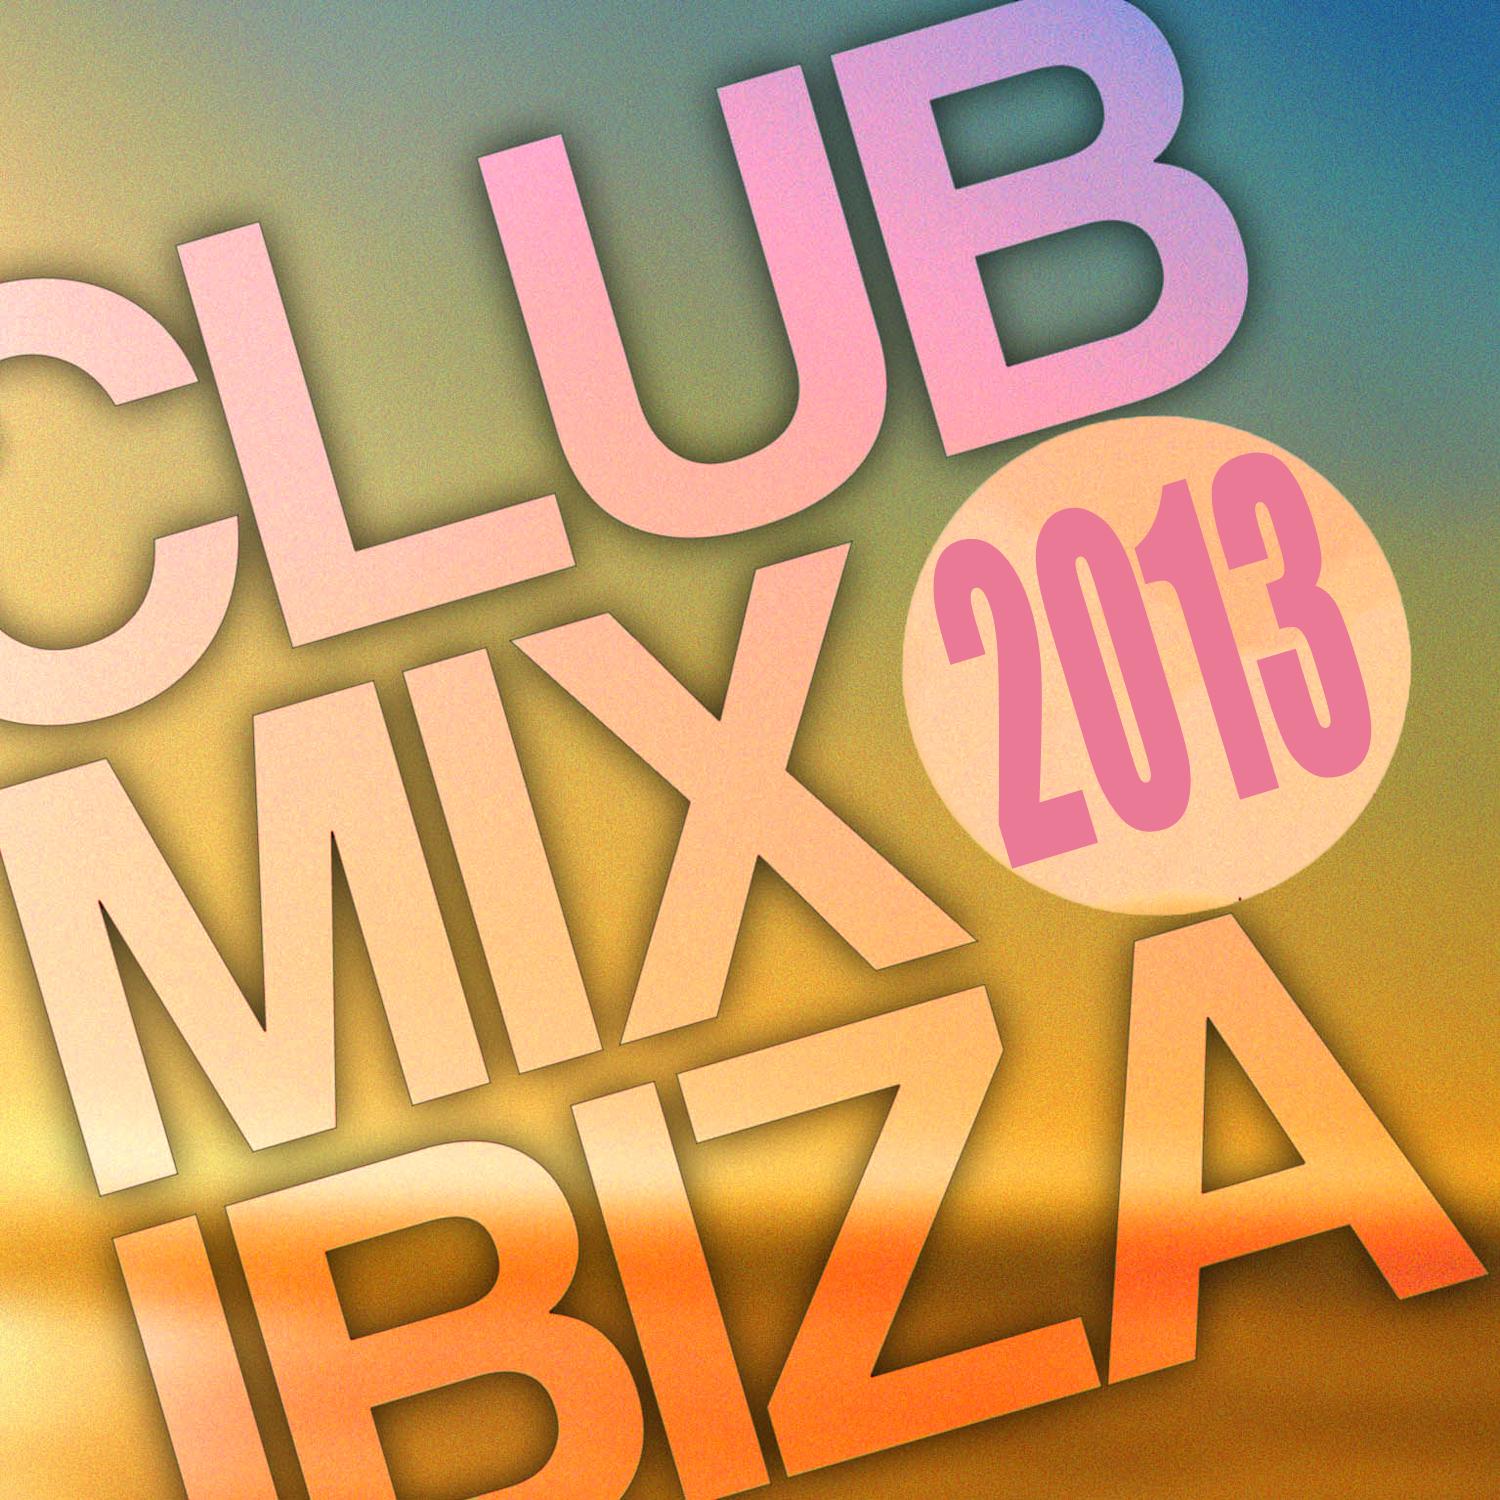 Club Mix Ibiza 2013